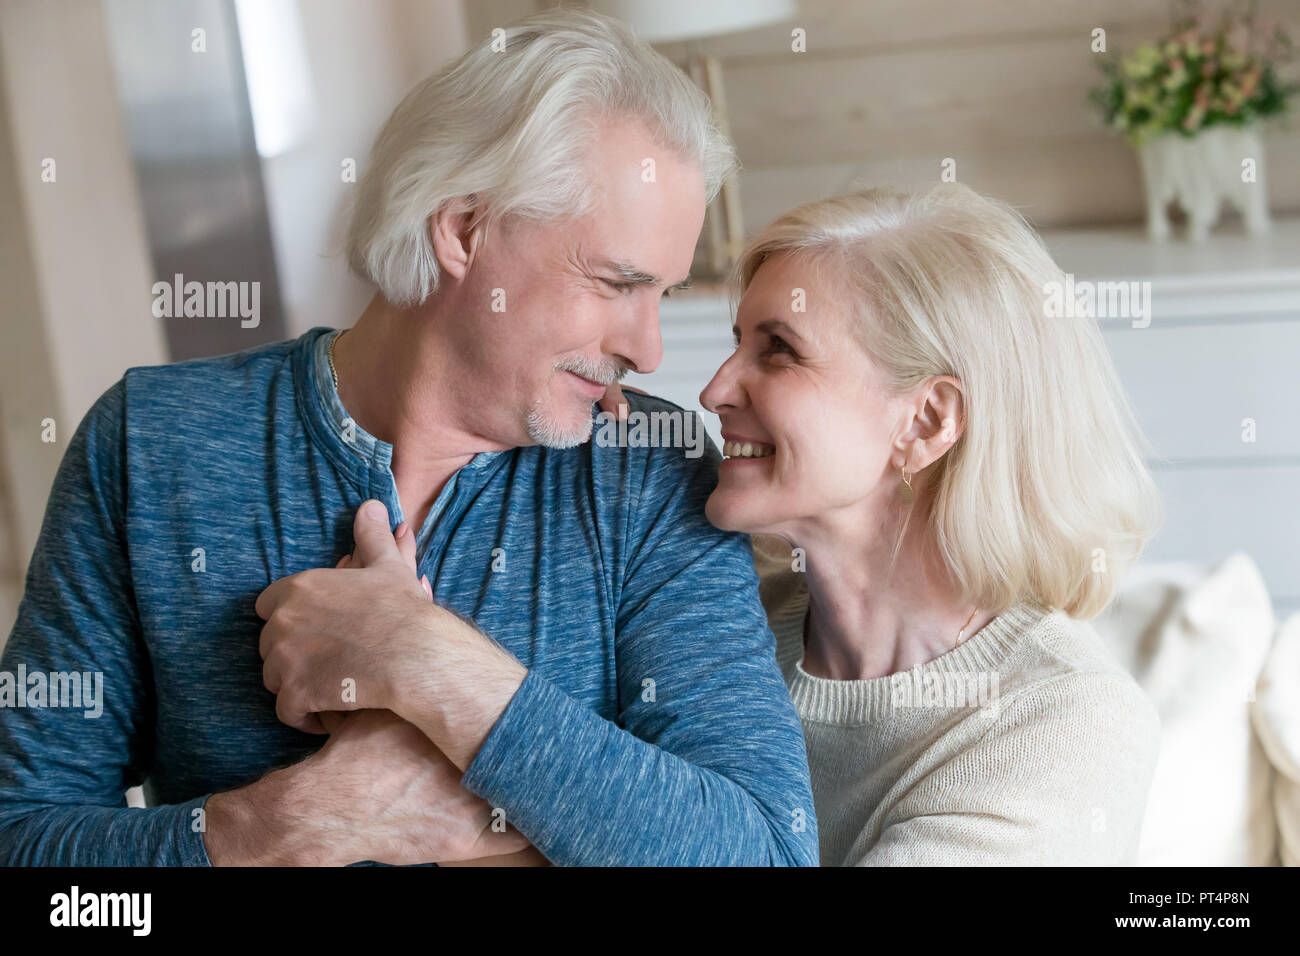 Caring senior man admiring aged woman enjoying sincere feelings Stock Photo